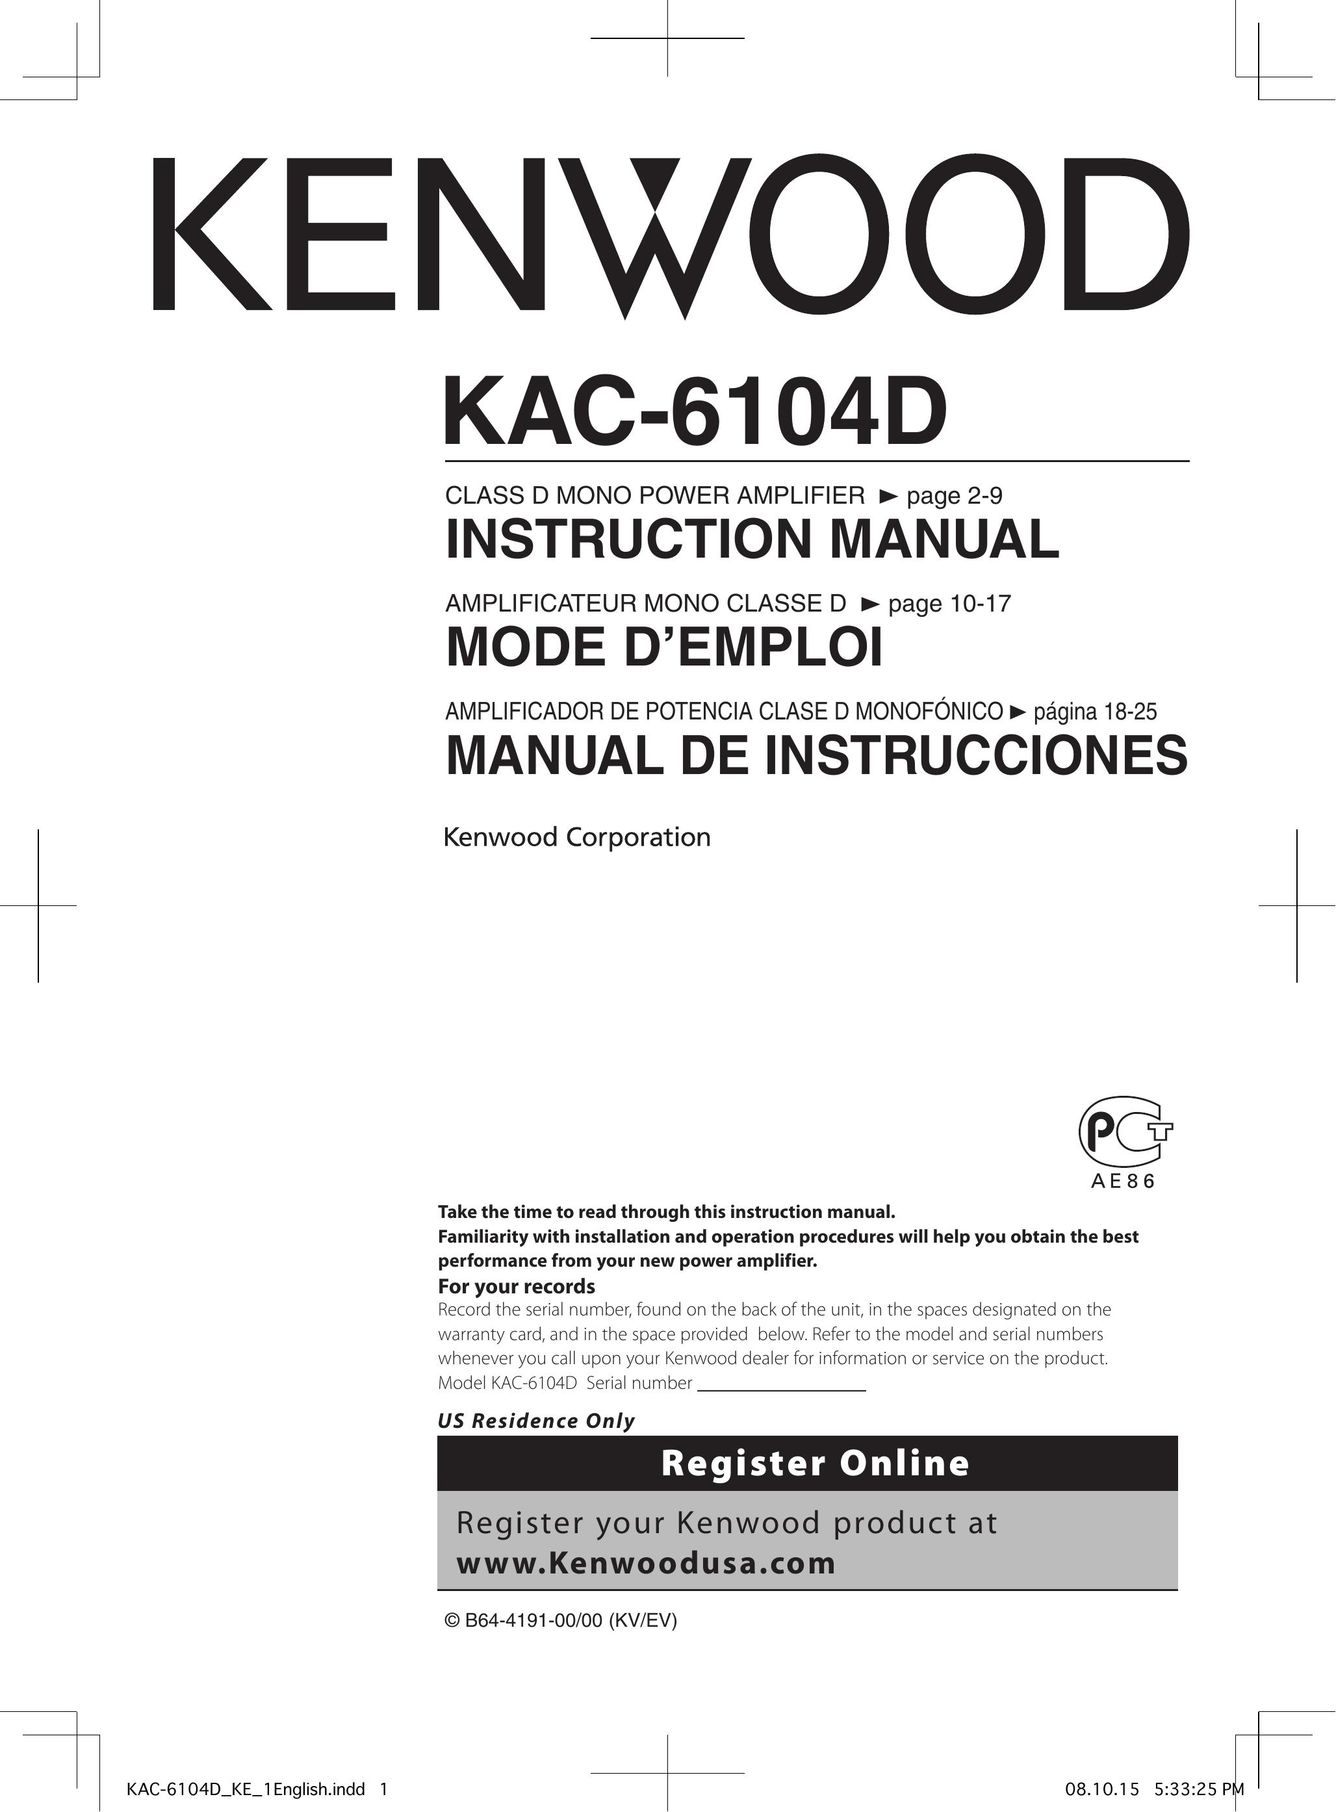 Kenwood KAC-6104D Stereo Amplifier User Manual